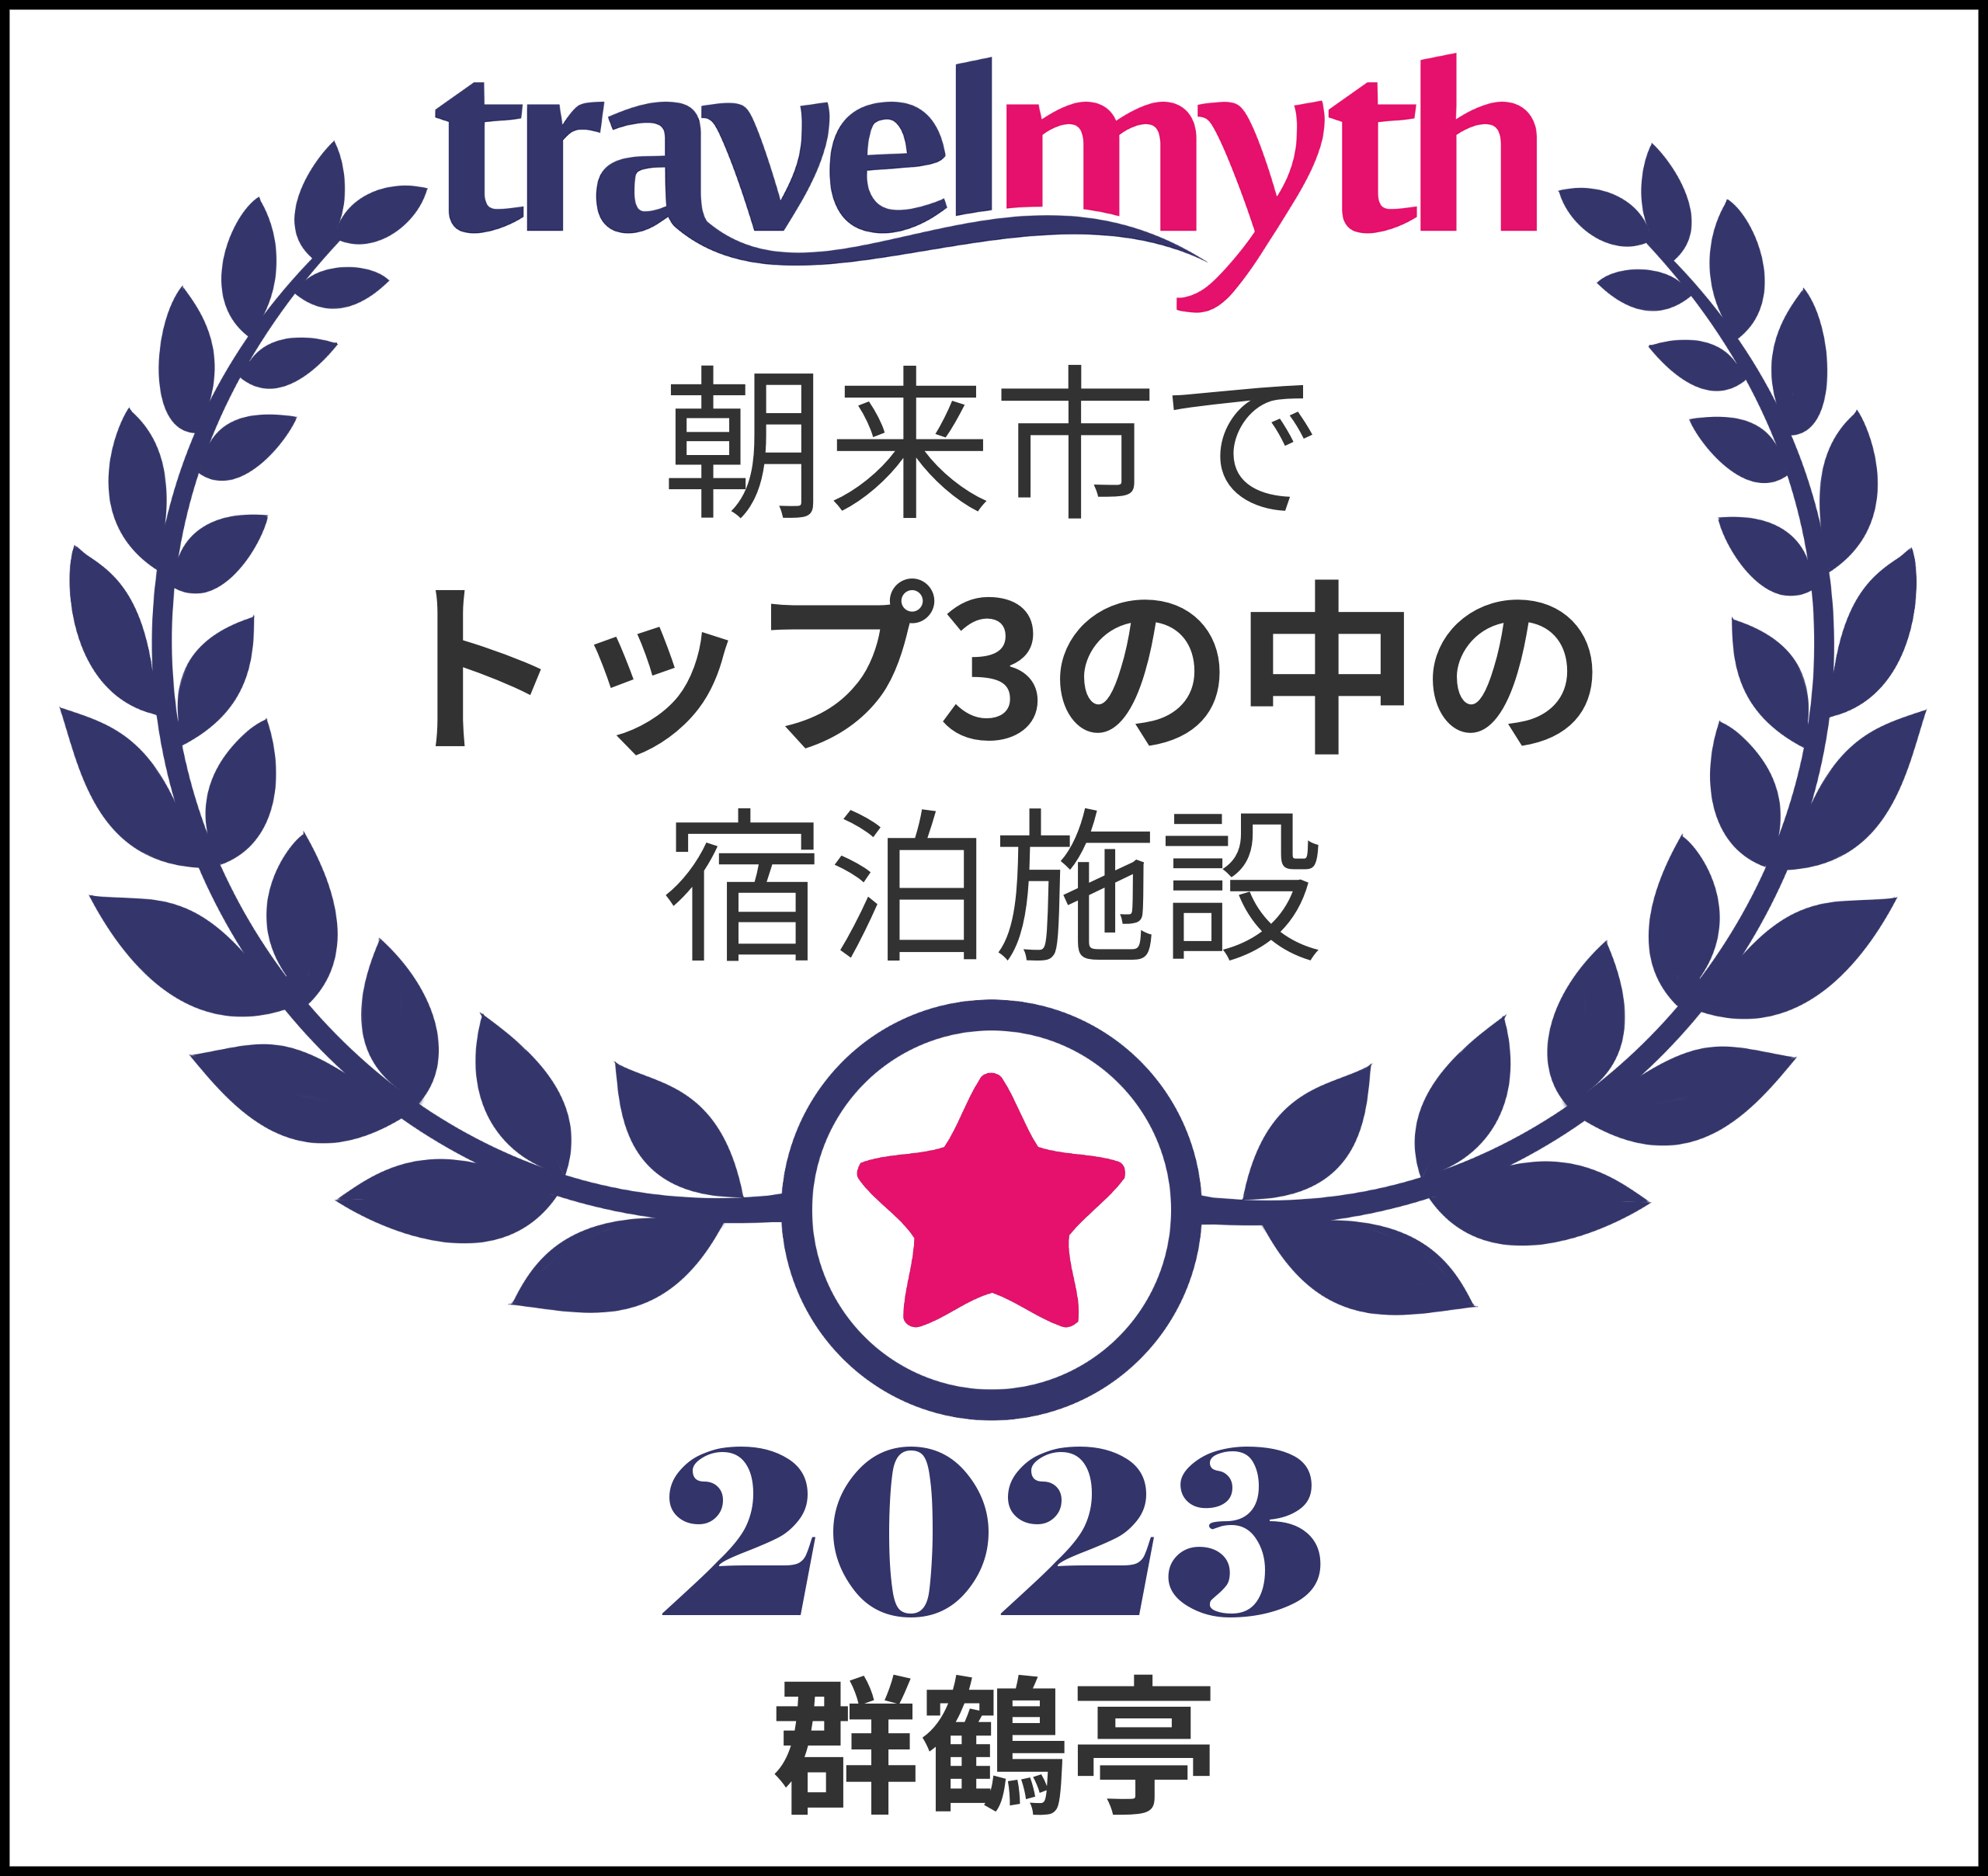 Travelmyth 2023